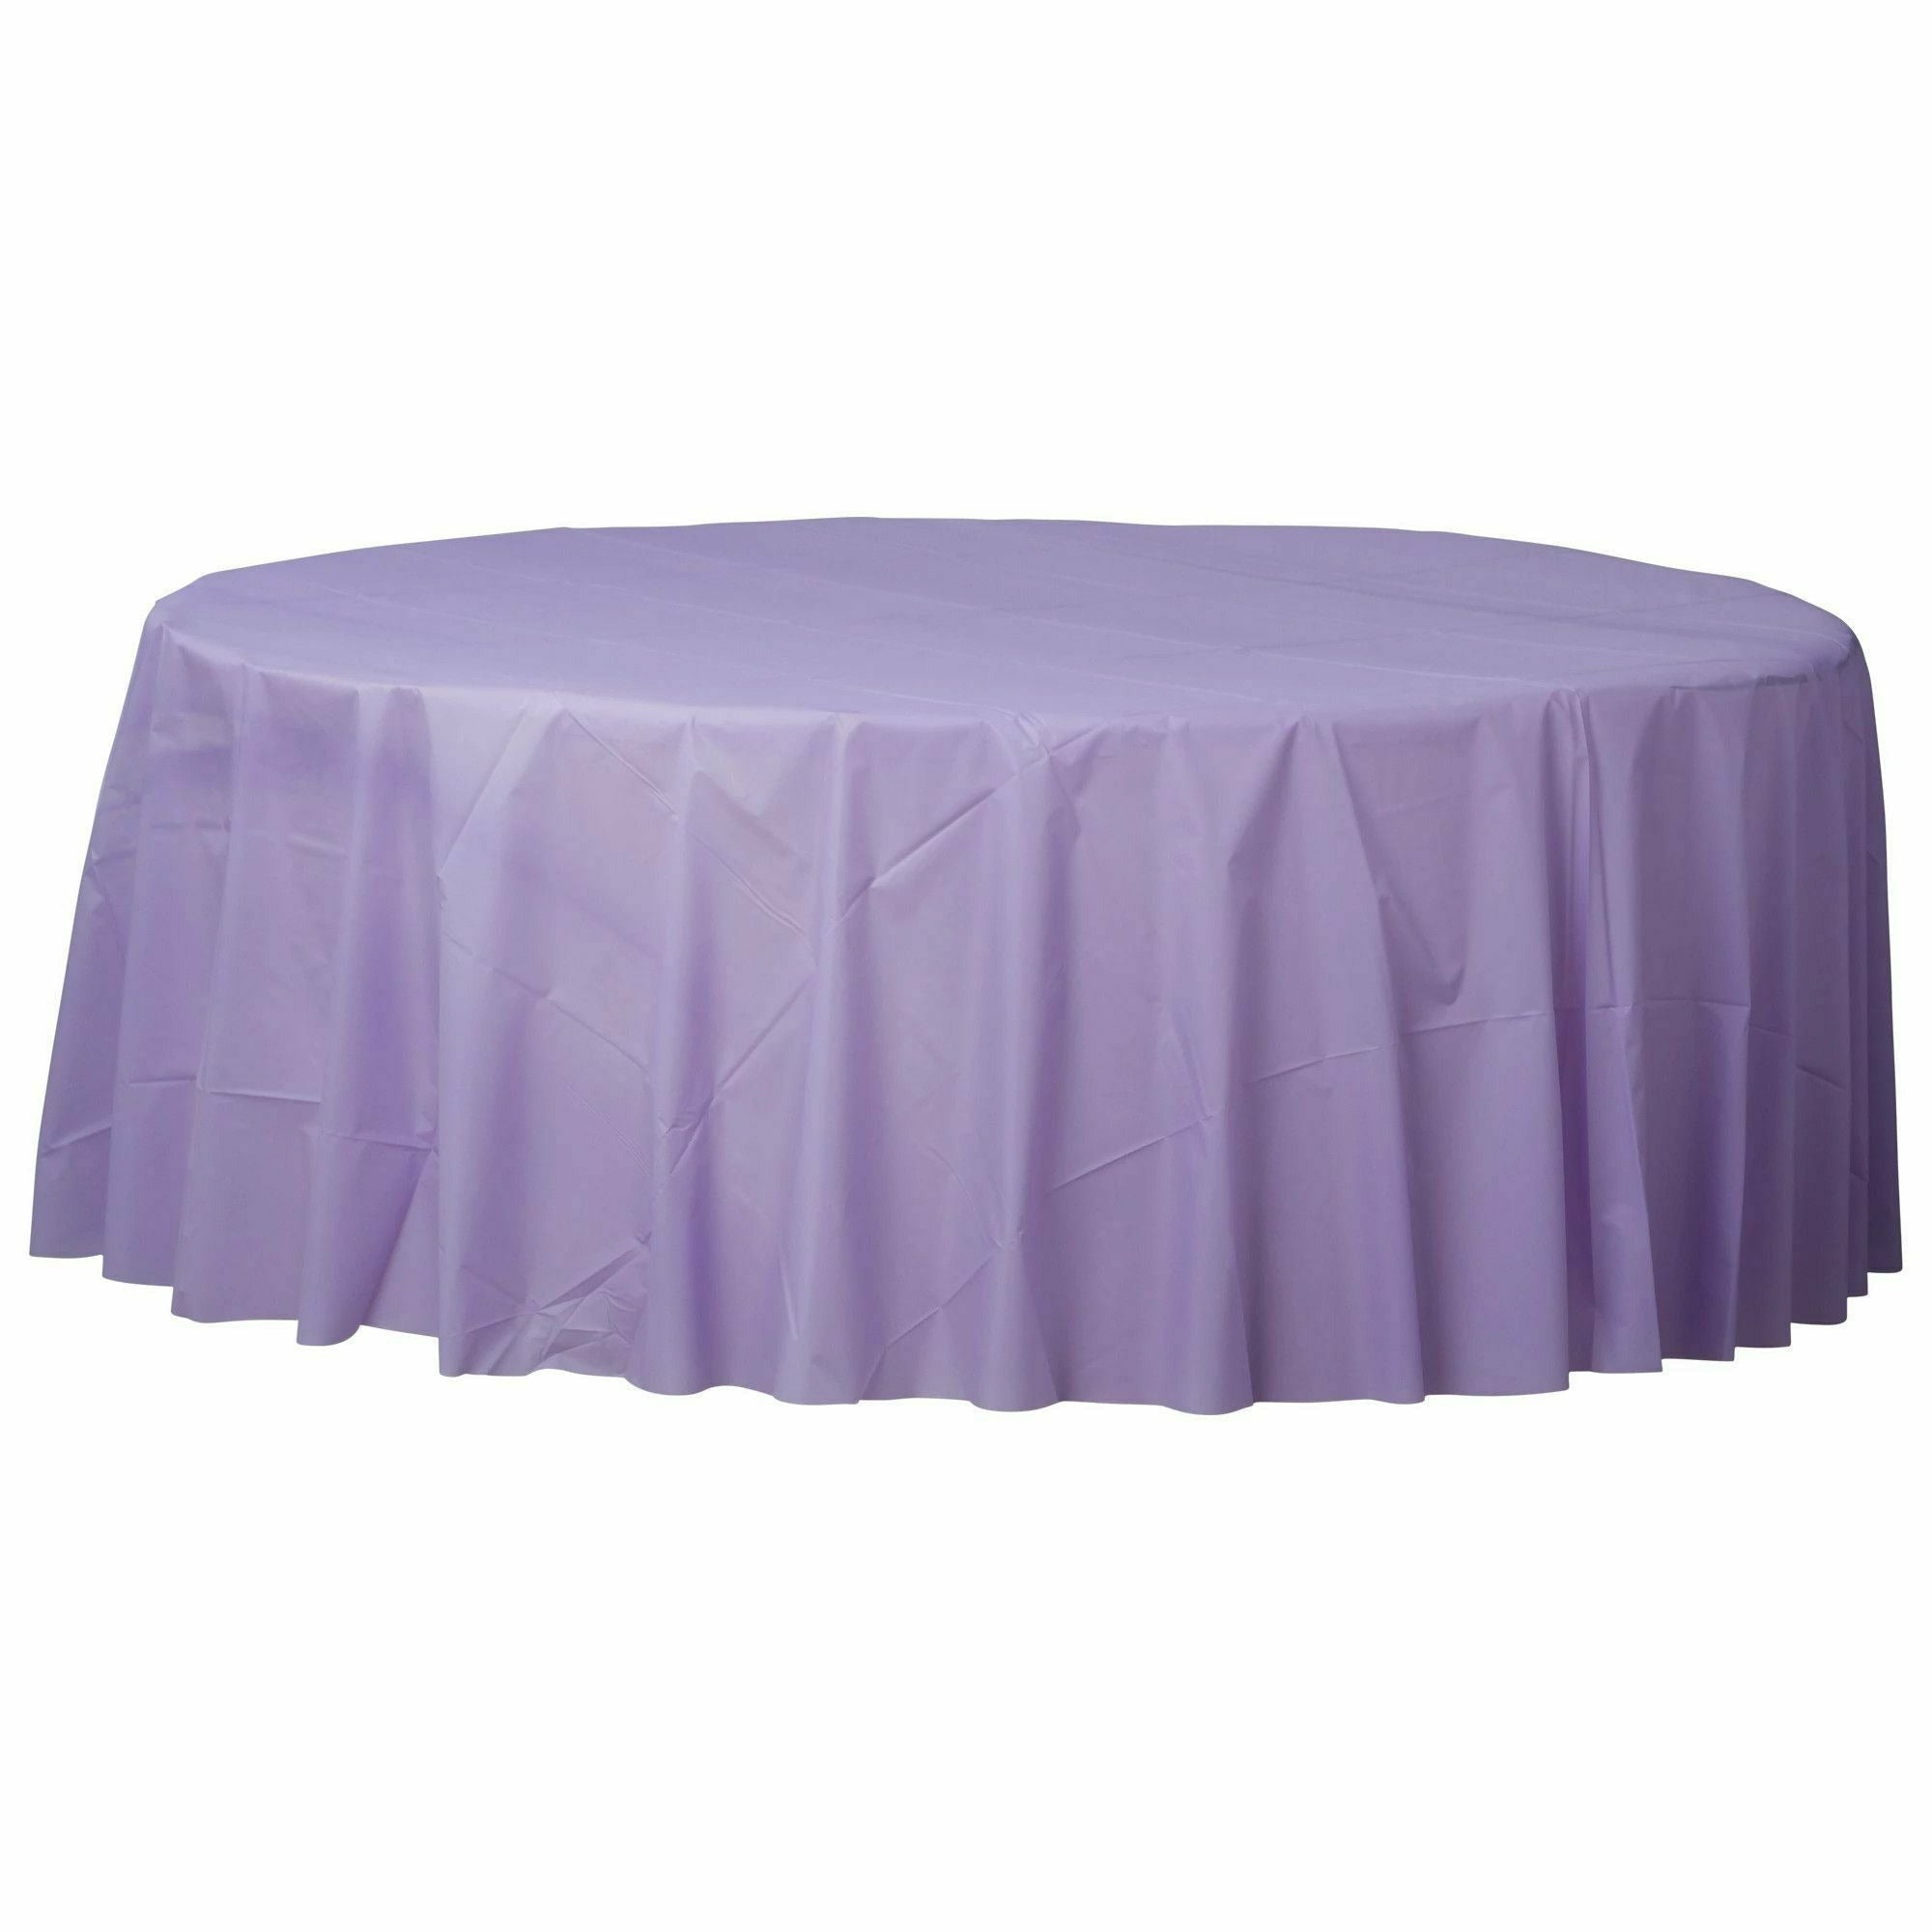 Amscan BASIC Lavender - 84" Round Plastic Table Cover